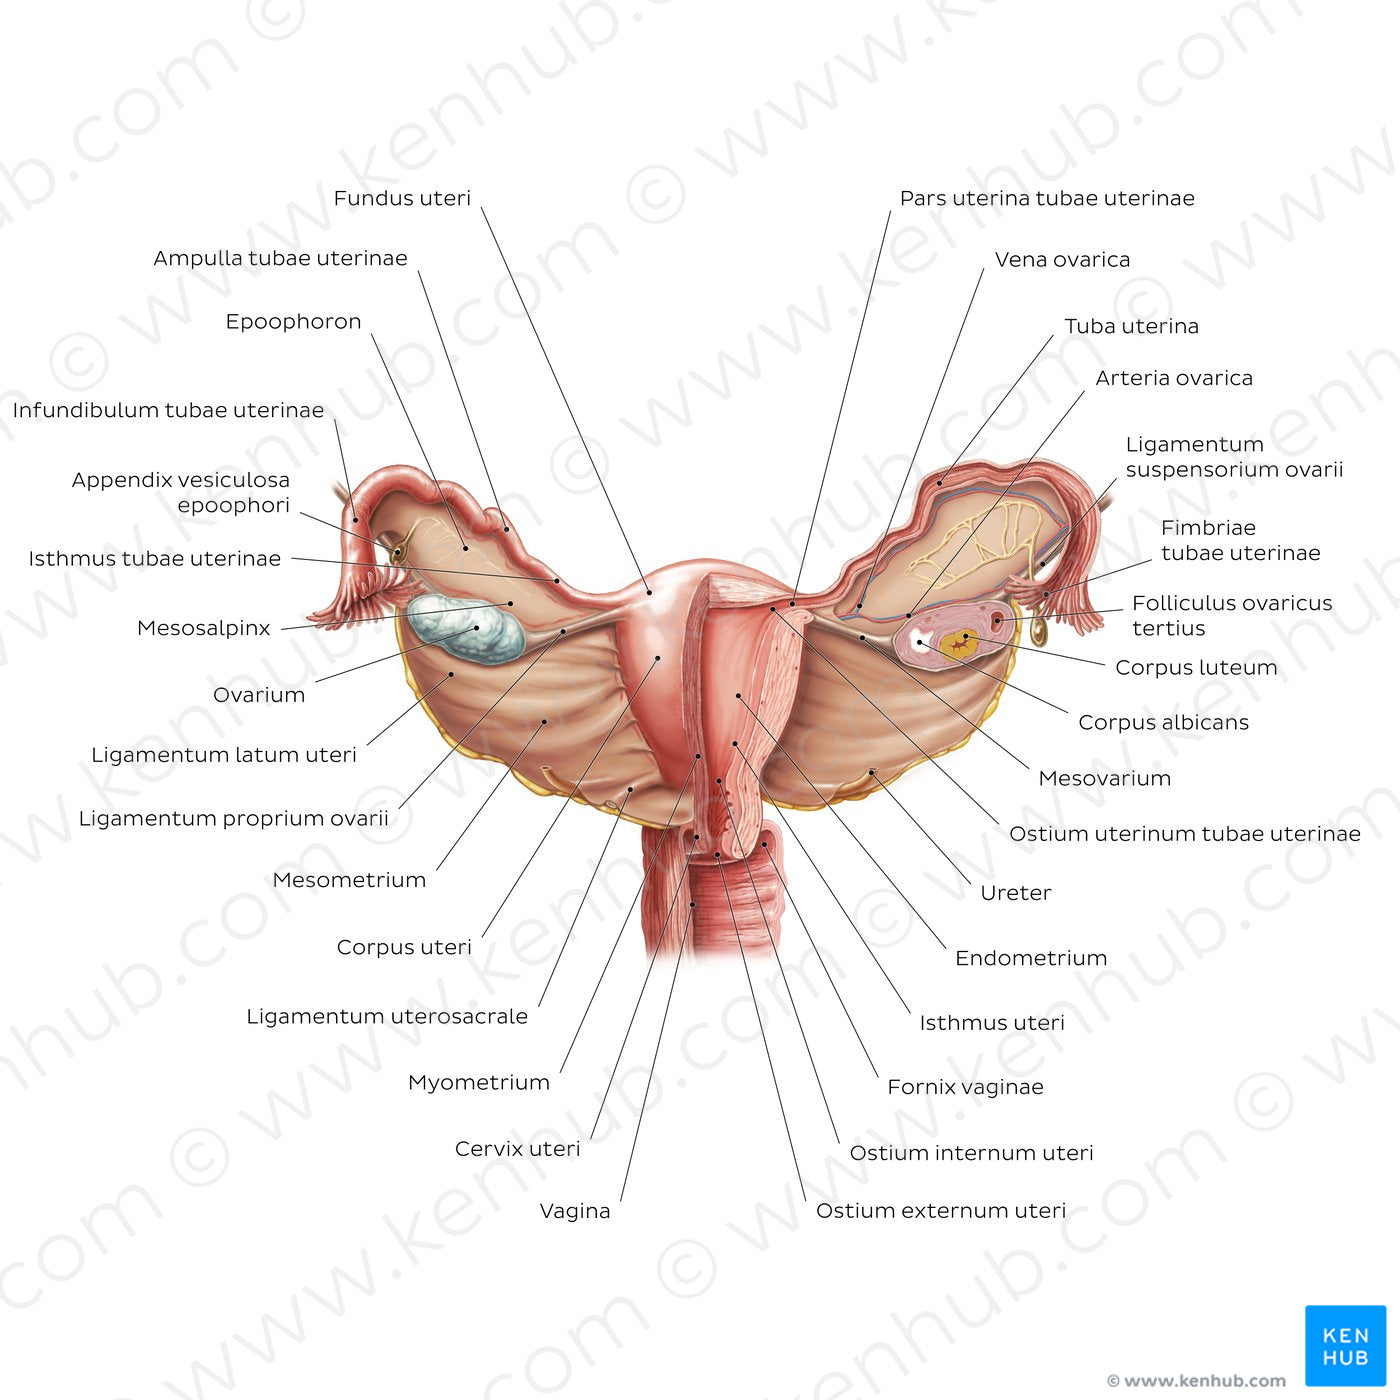 Uterus and ovaries (Latin)